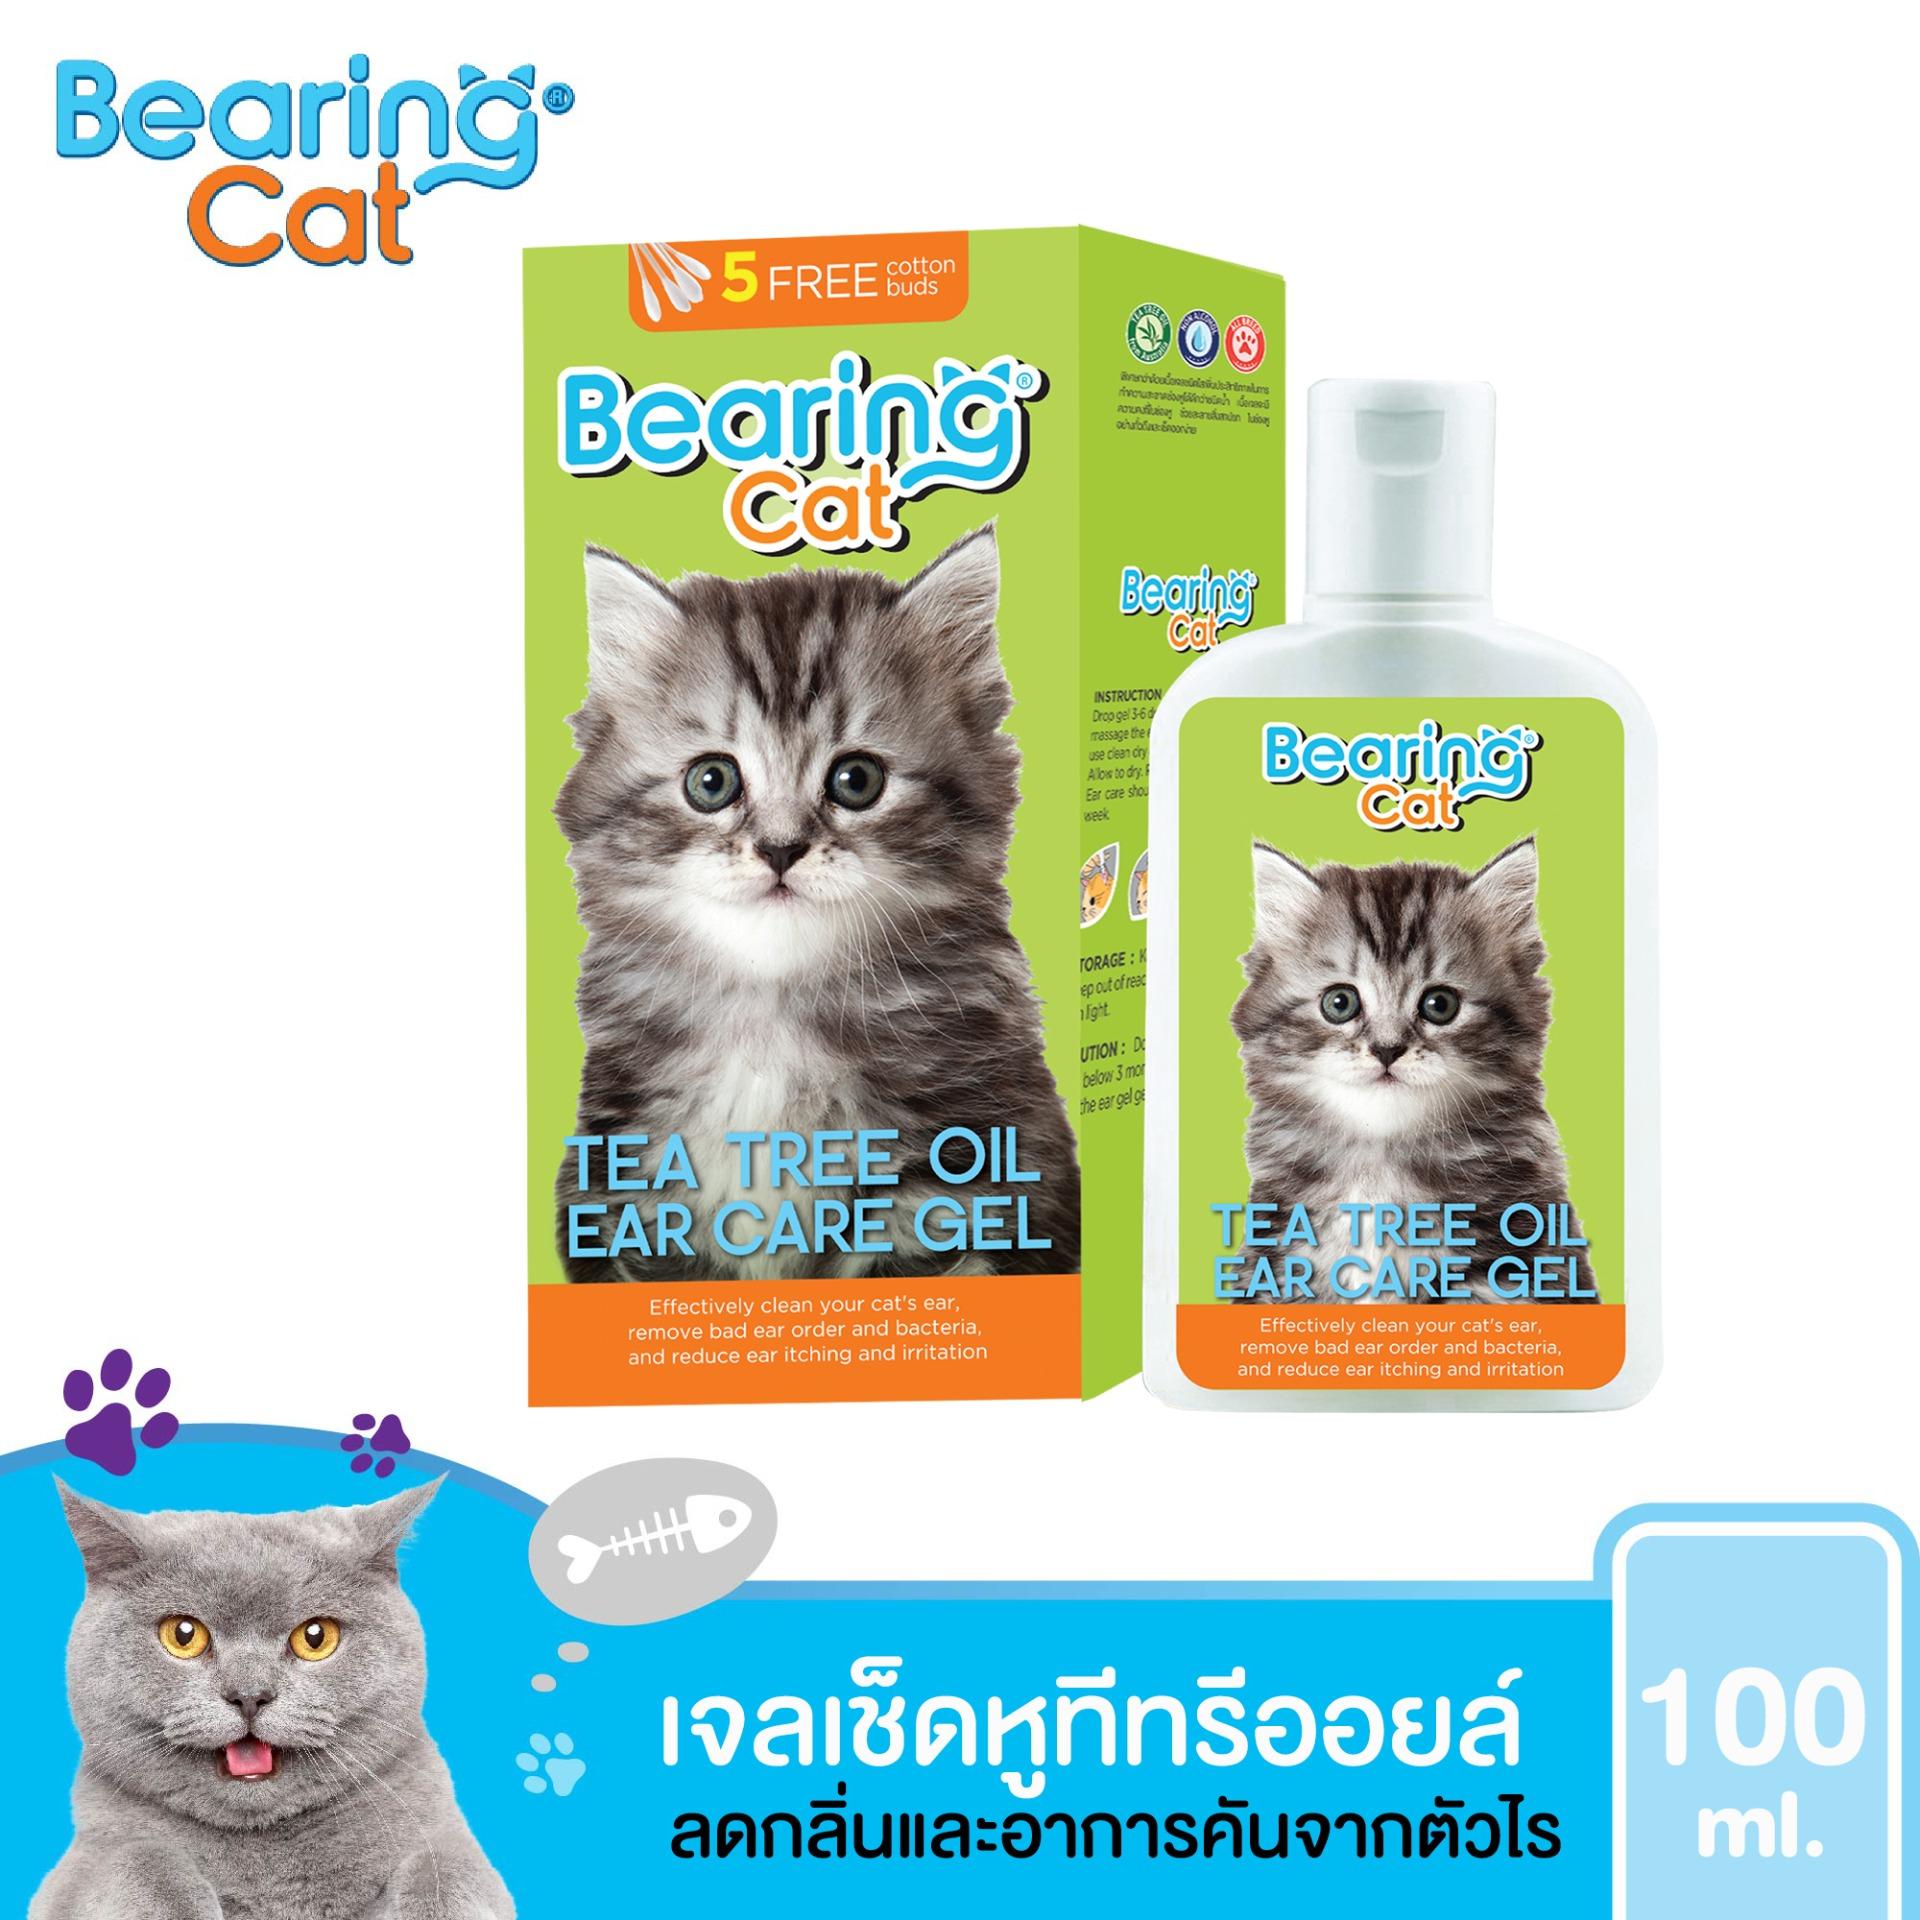 Bearing Cat Tea Tree Oil Ear Care Gel แบร์ริ่งเจลเช็ดหูแมว 100ml.